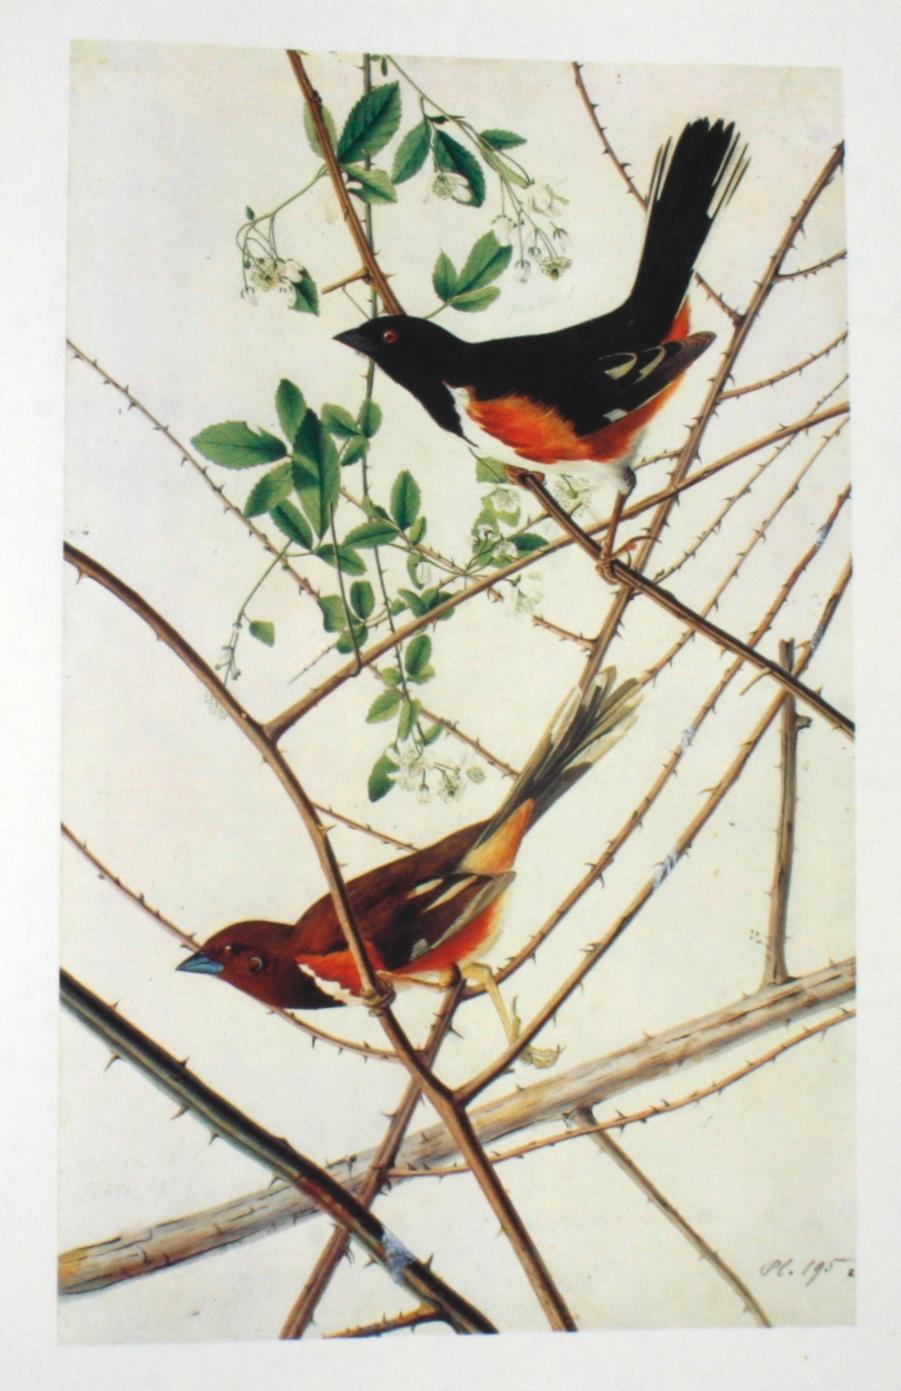 Paper Birds of America by John James Audubon, Vol. I & II, First Edition